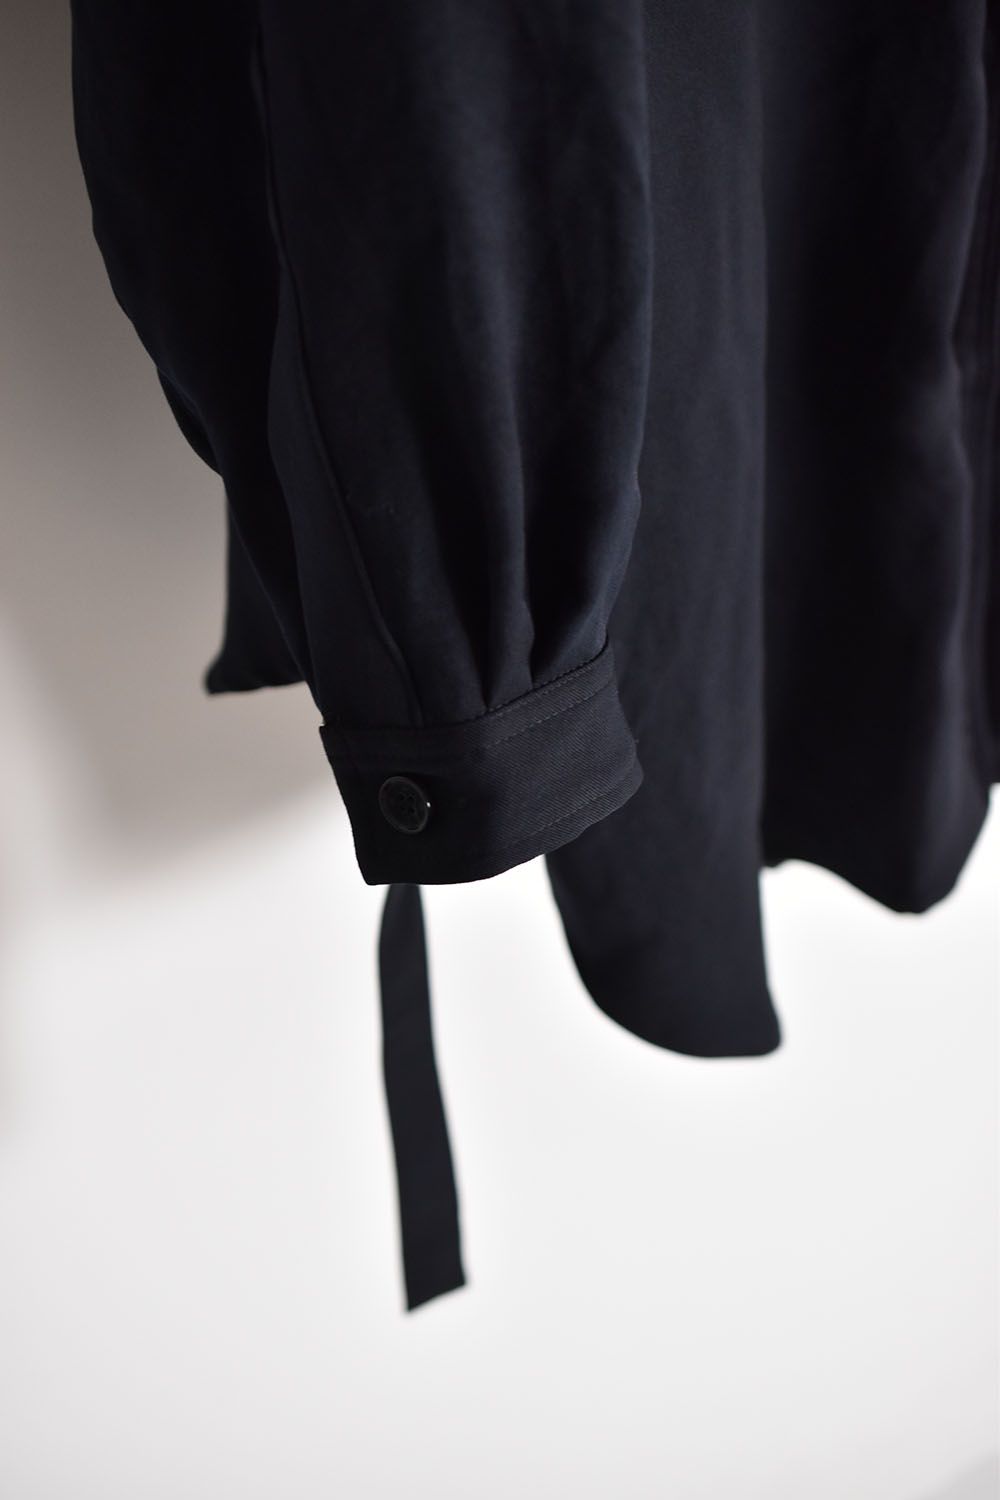 Over Shirts Coat"Black"/オーバーシャツコート"ブラック"